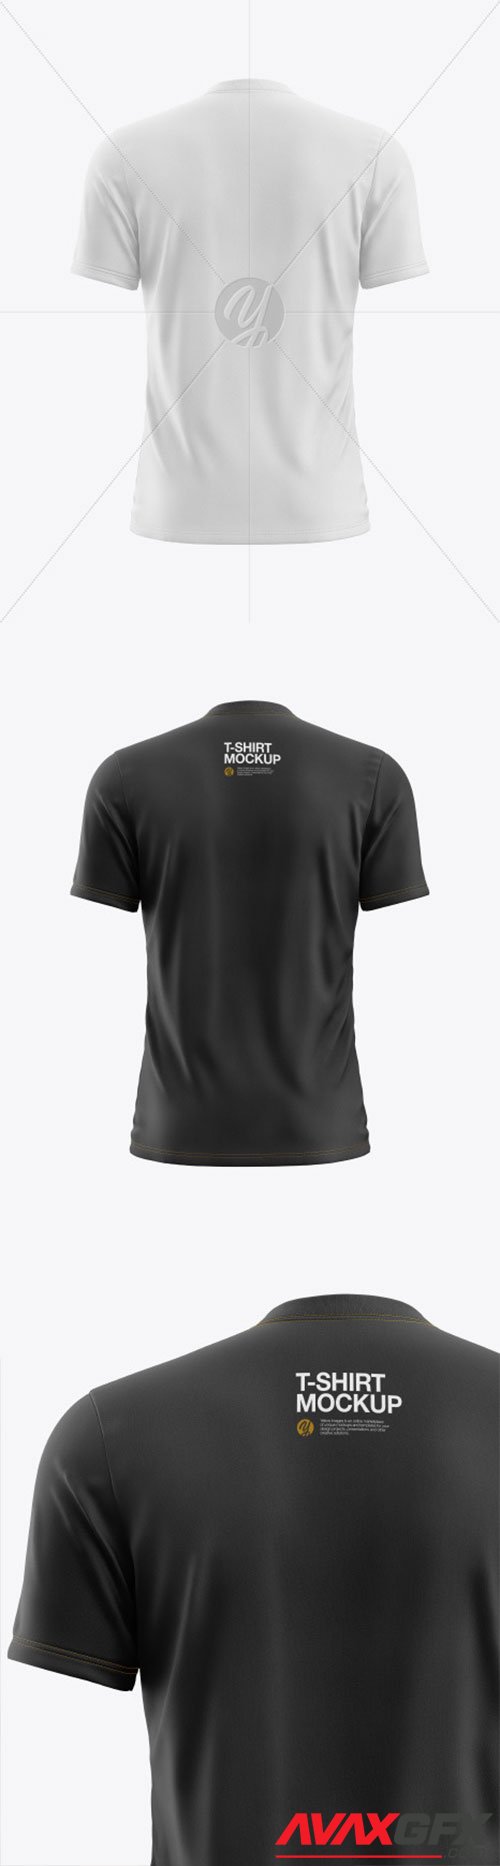 Men's T-Shirt Mockup 68533